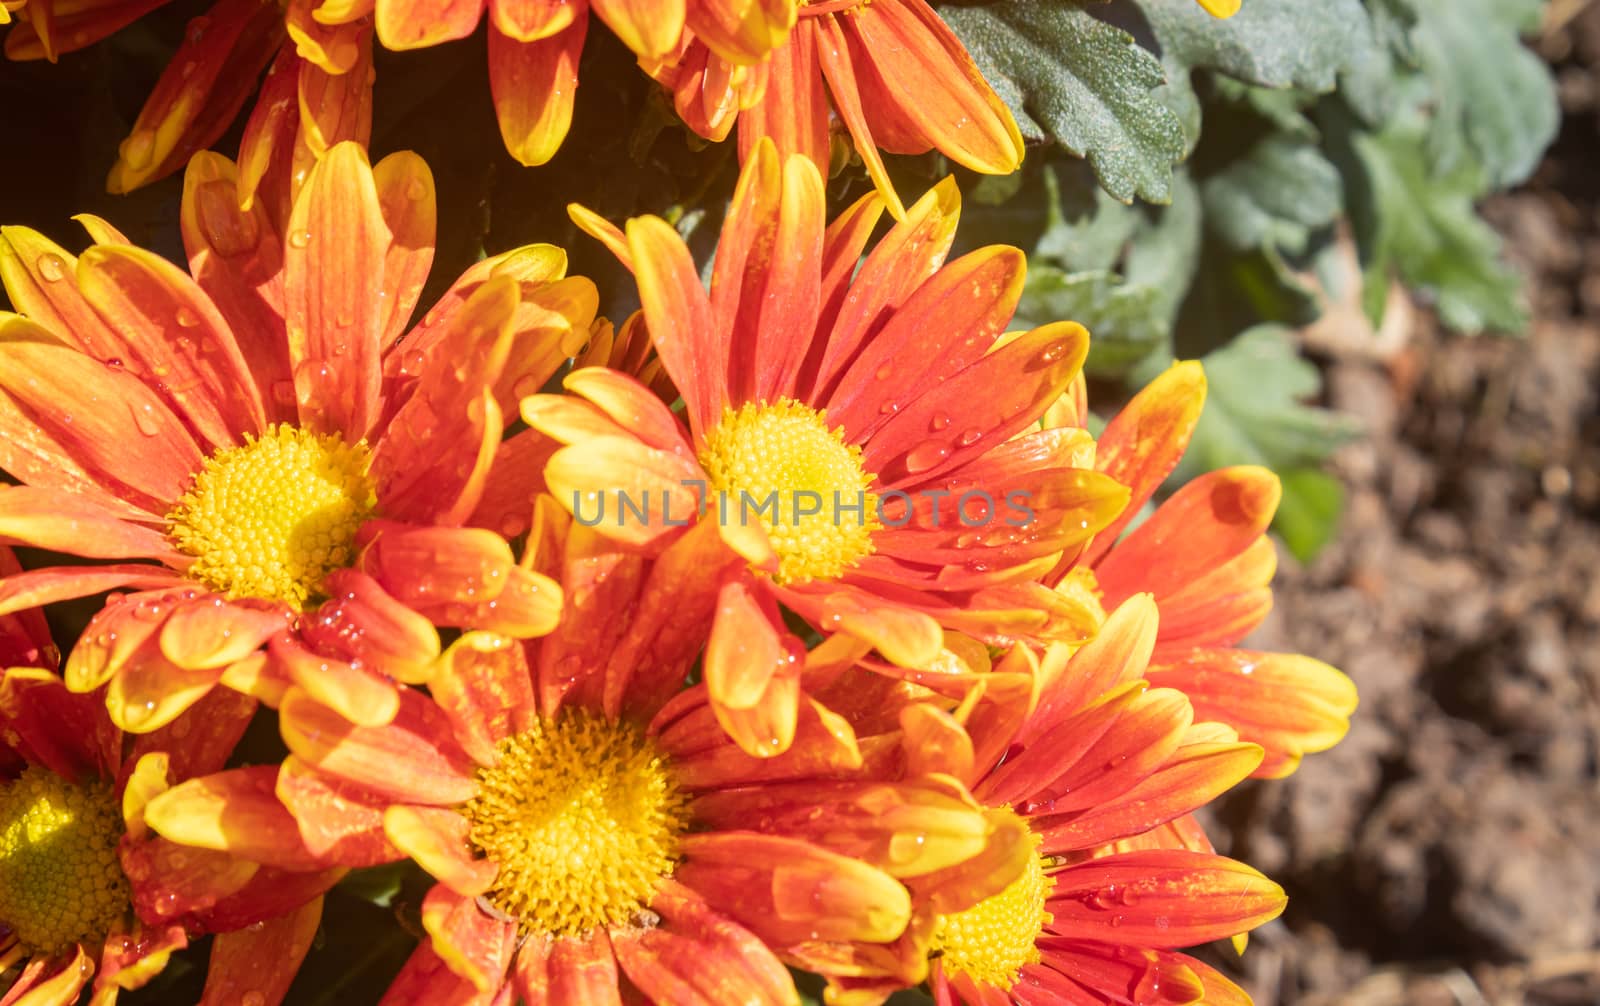 Orange Gerbera Daisy or Gerbera Flower in Garden on Left Frame by steafpong